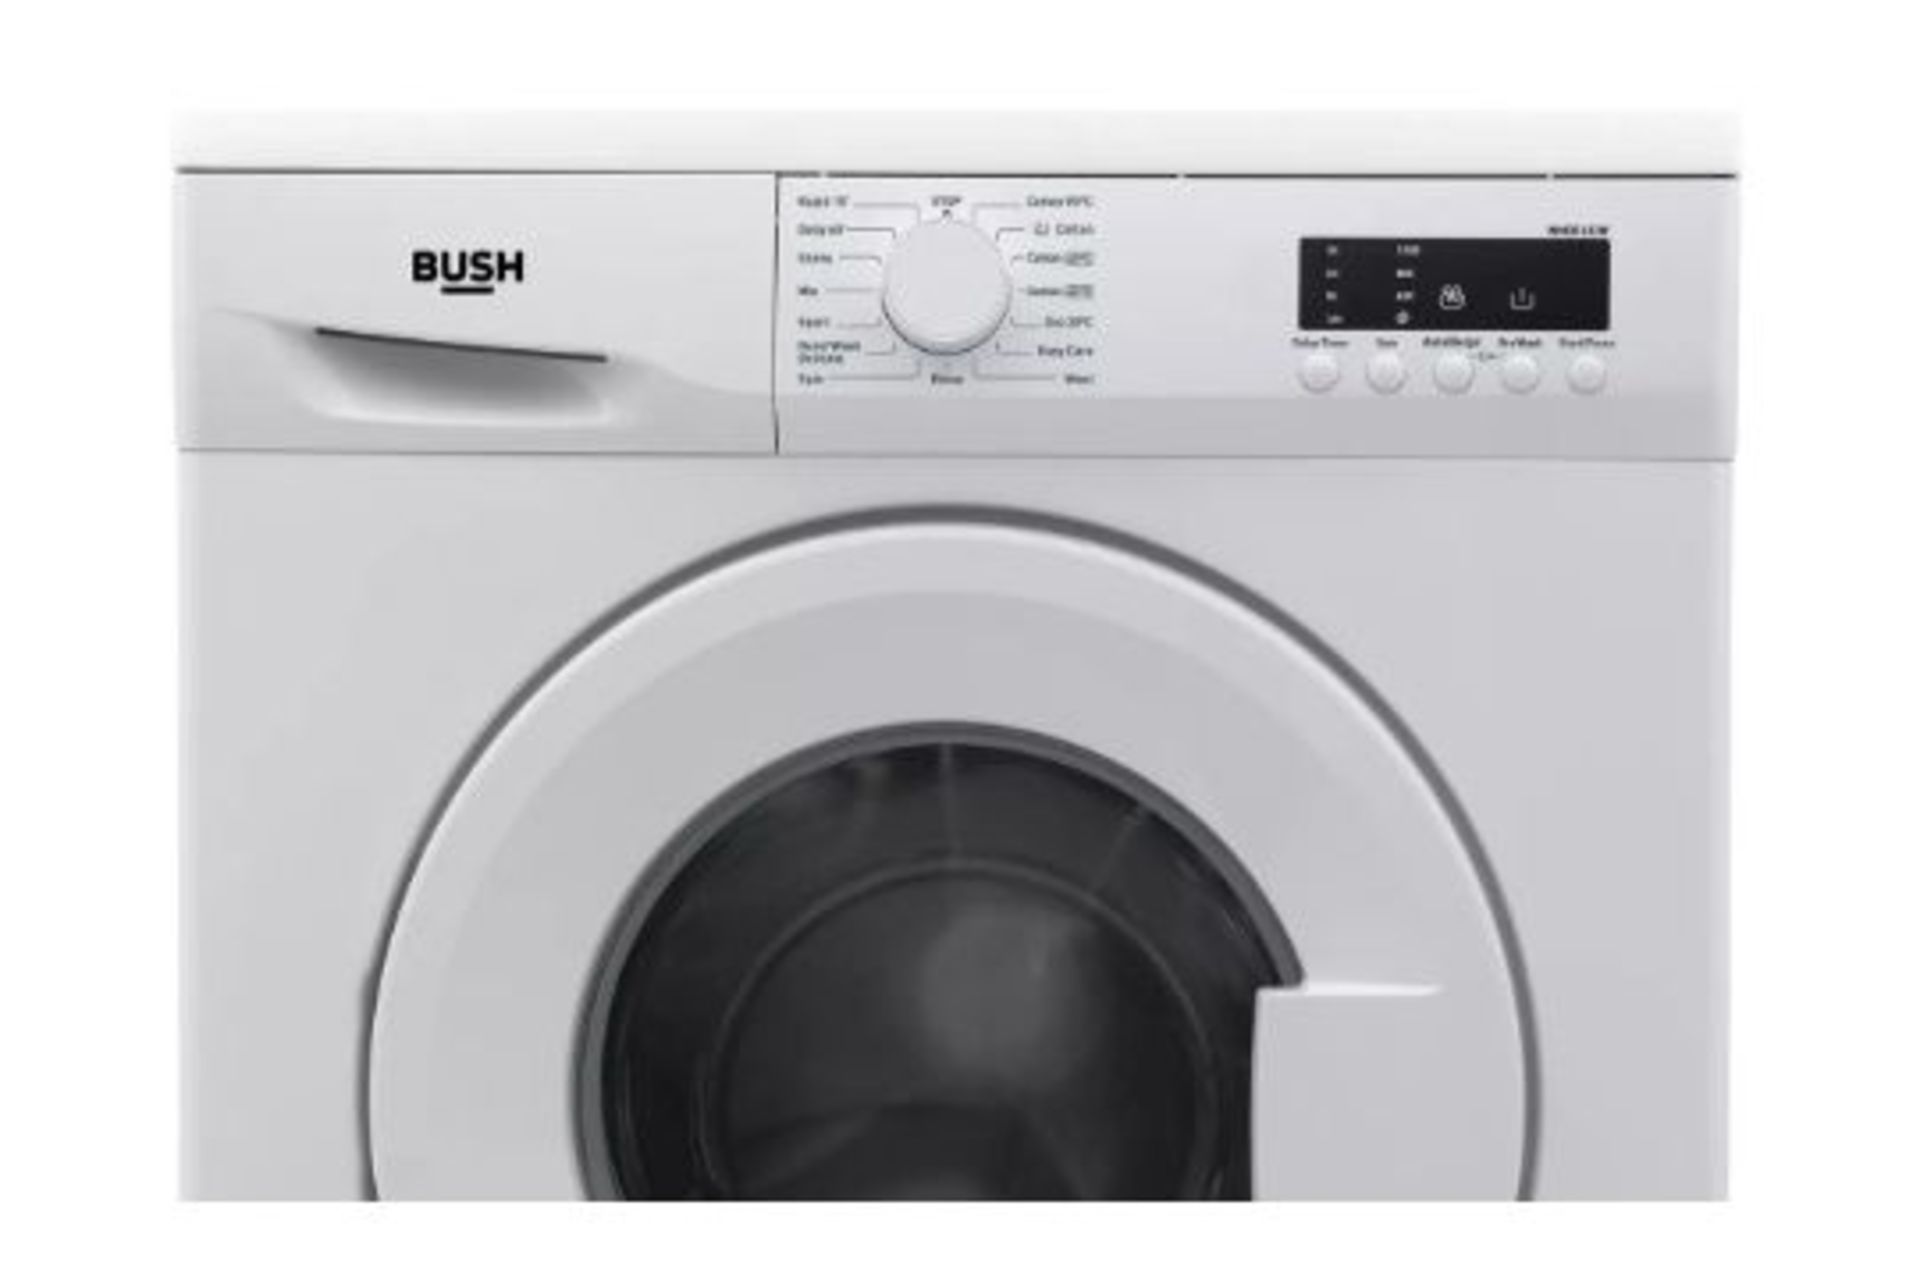 Bush WMDF612W 6KG 1200 Spin Washing Machine - White - ARGOS RRP £179.99 - Image 3 of 5